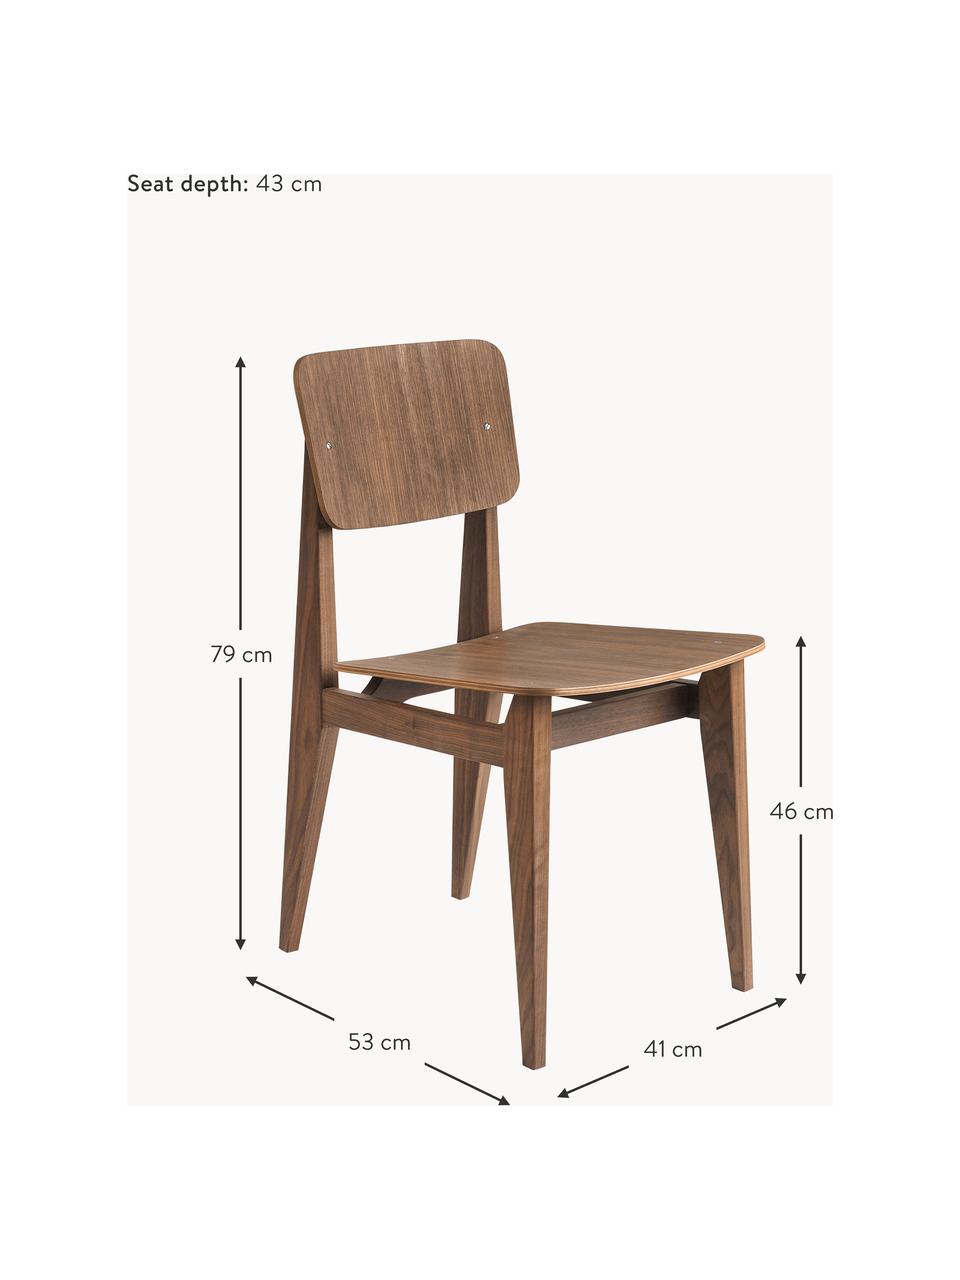 Holzstuhl C-Chair aus Walnussholz, Amerikanisches Walnussholz, geölt, Amerikanisches Walnussholz, B 41 x T 53 cm